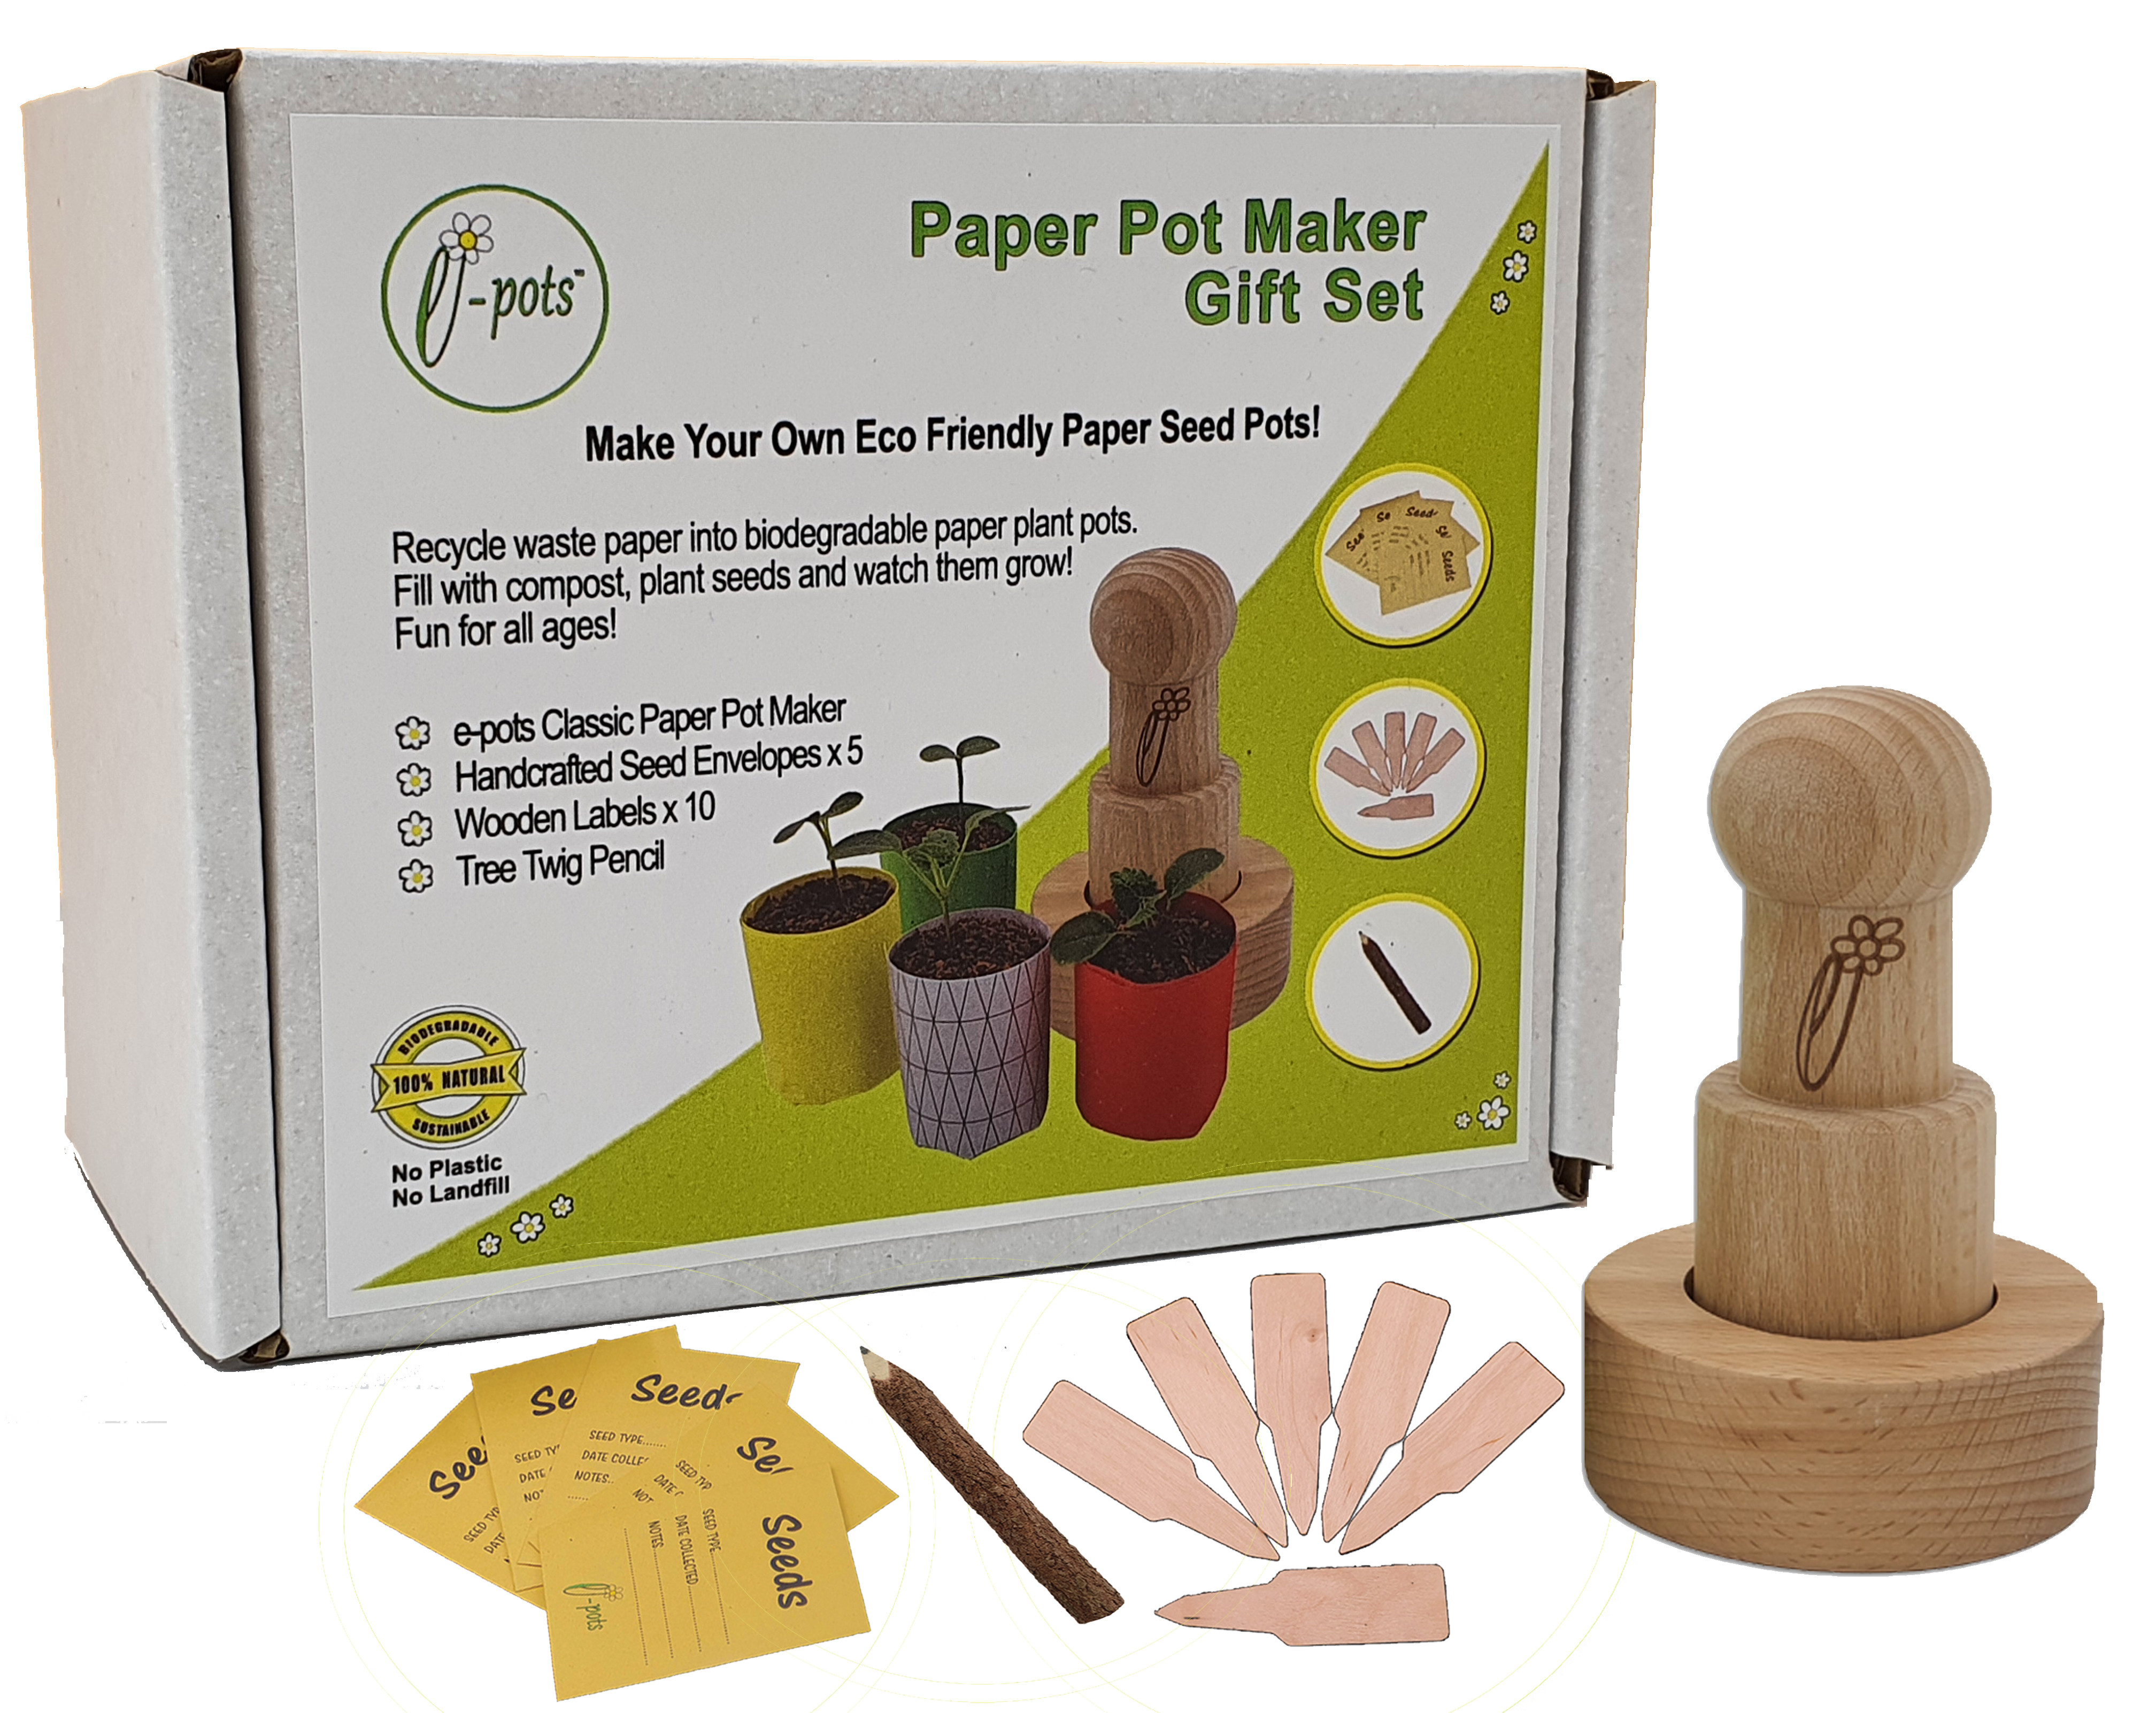 Paper Pot Maker Gift Set